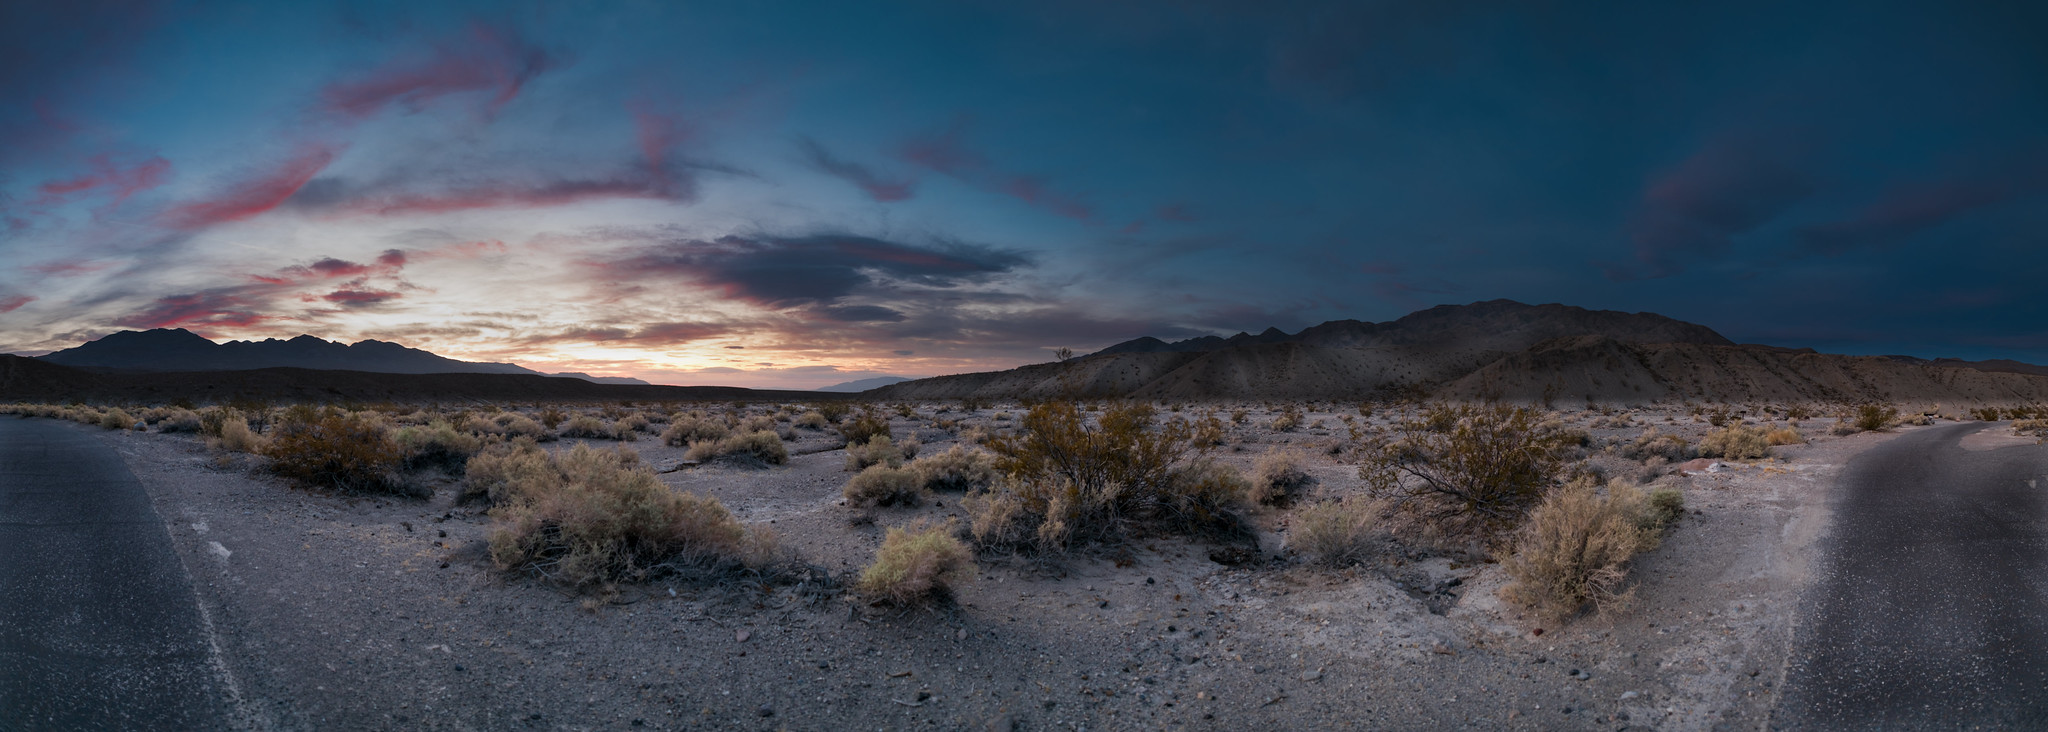 Death Valley Sunrise